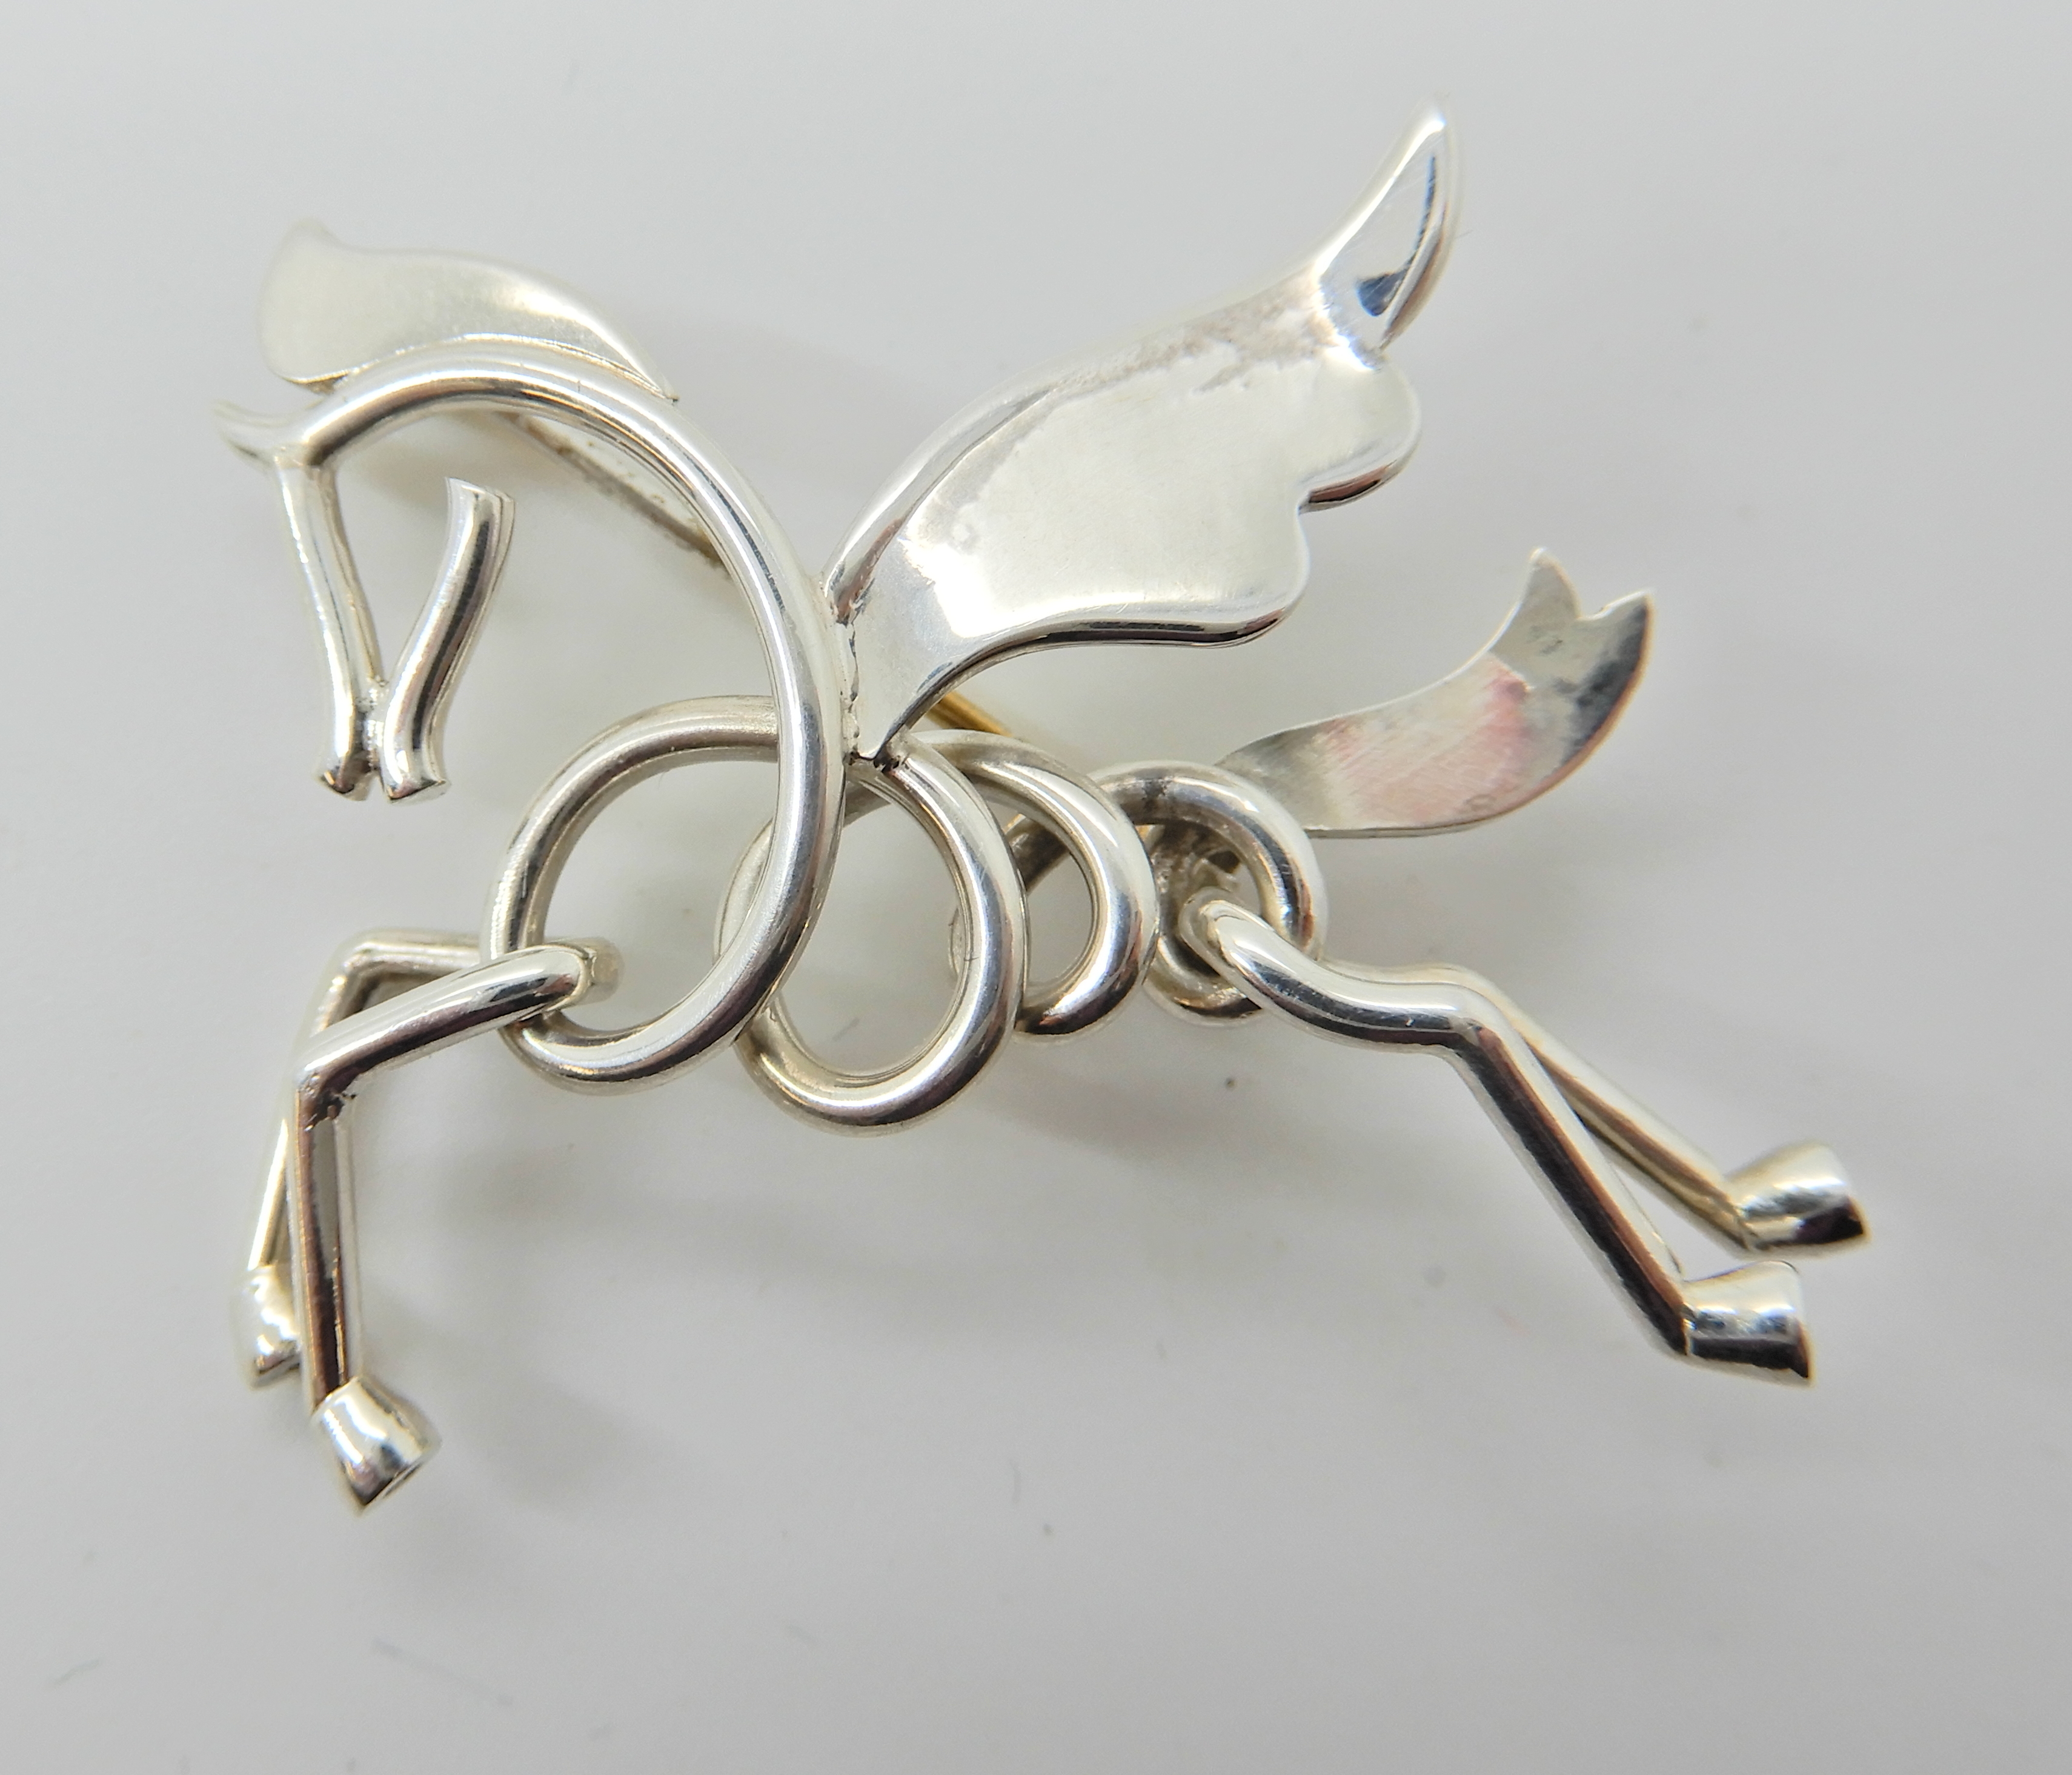 An Anton Michelsen silver Pegasus brooch, dimensions 3.8cm x 3cm, weight 5.3gms